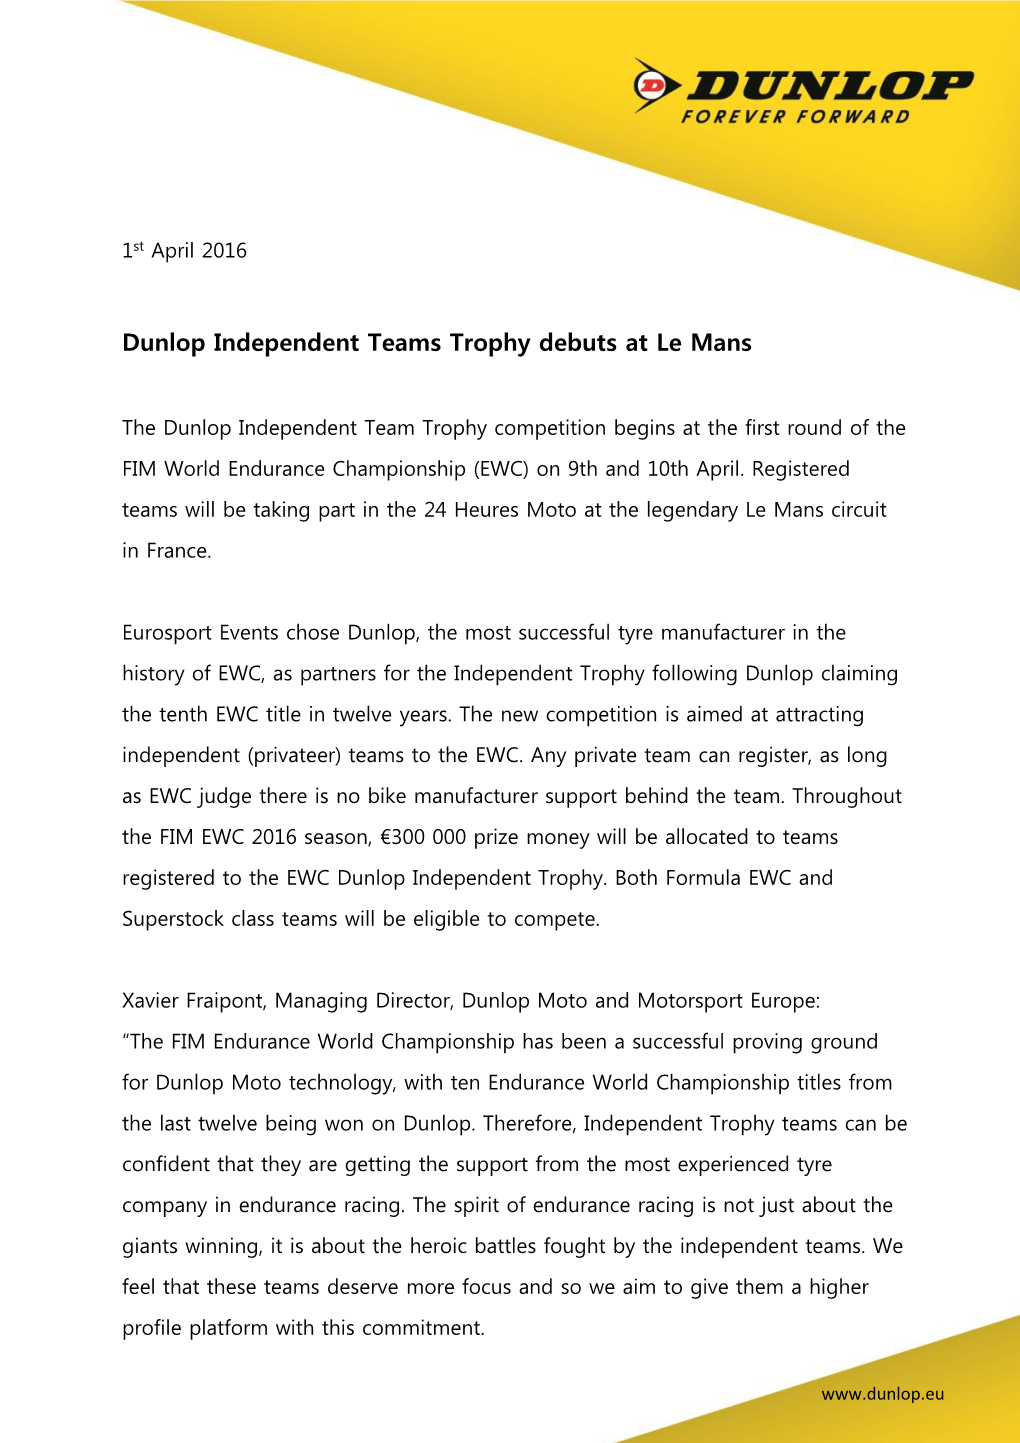 Dunlop Independent Teams Trophy Debuts at Le Mans